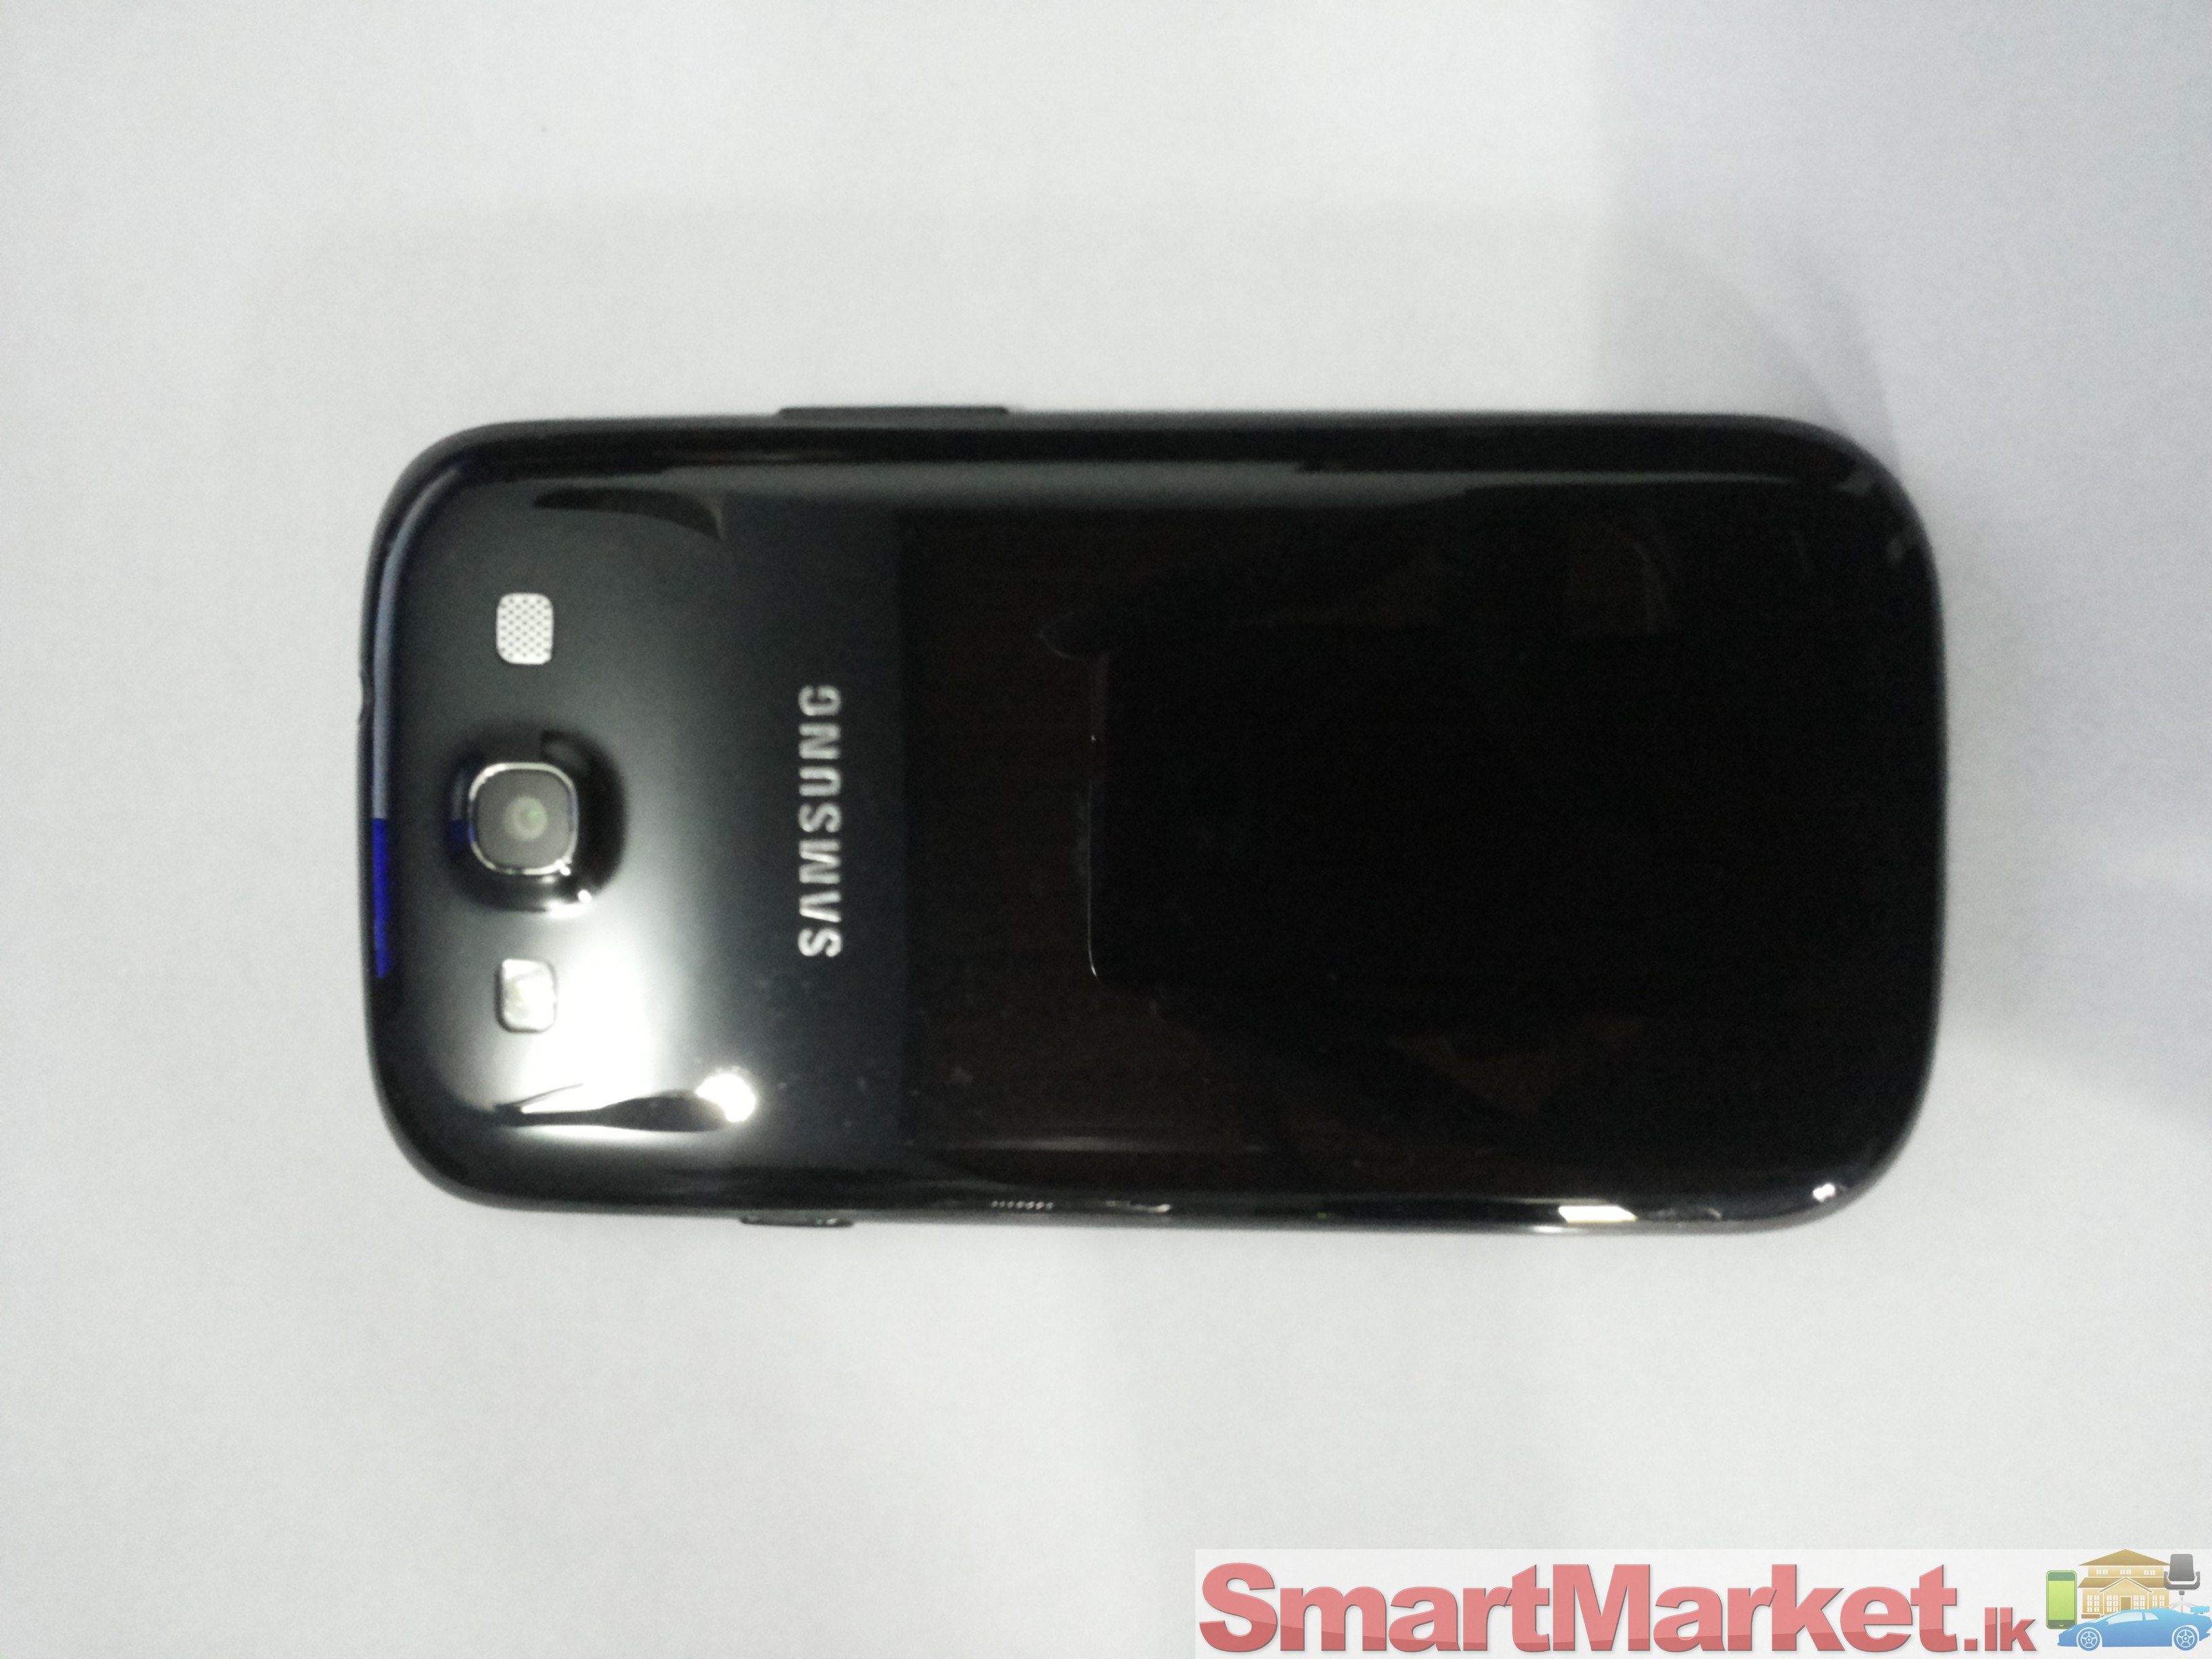 Samsung Galaxy S3 BLACK + 4 Covers FREE